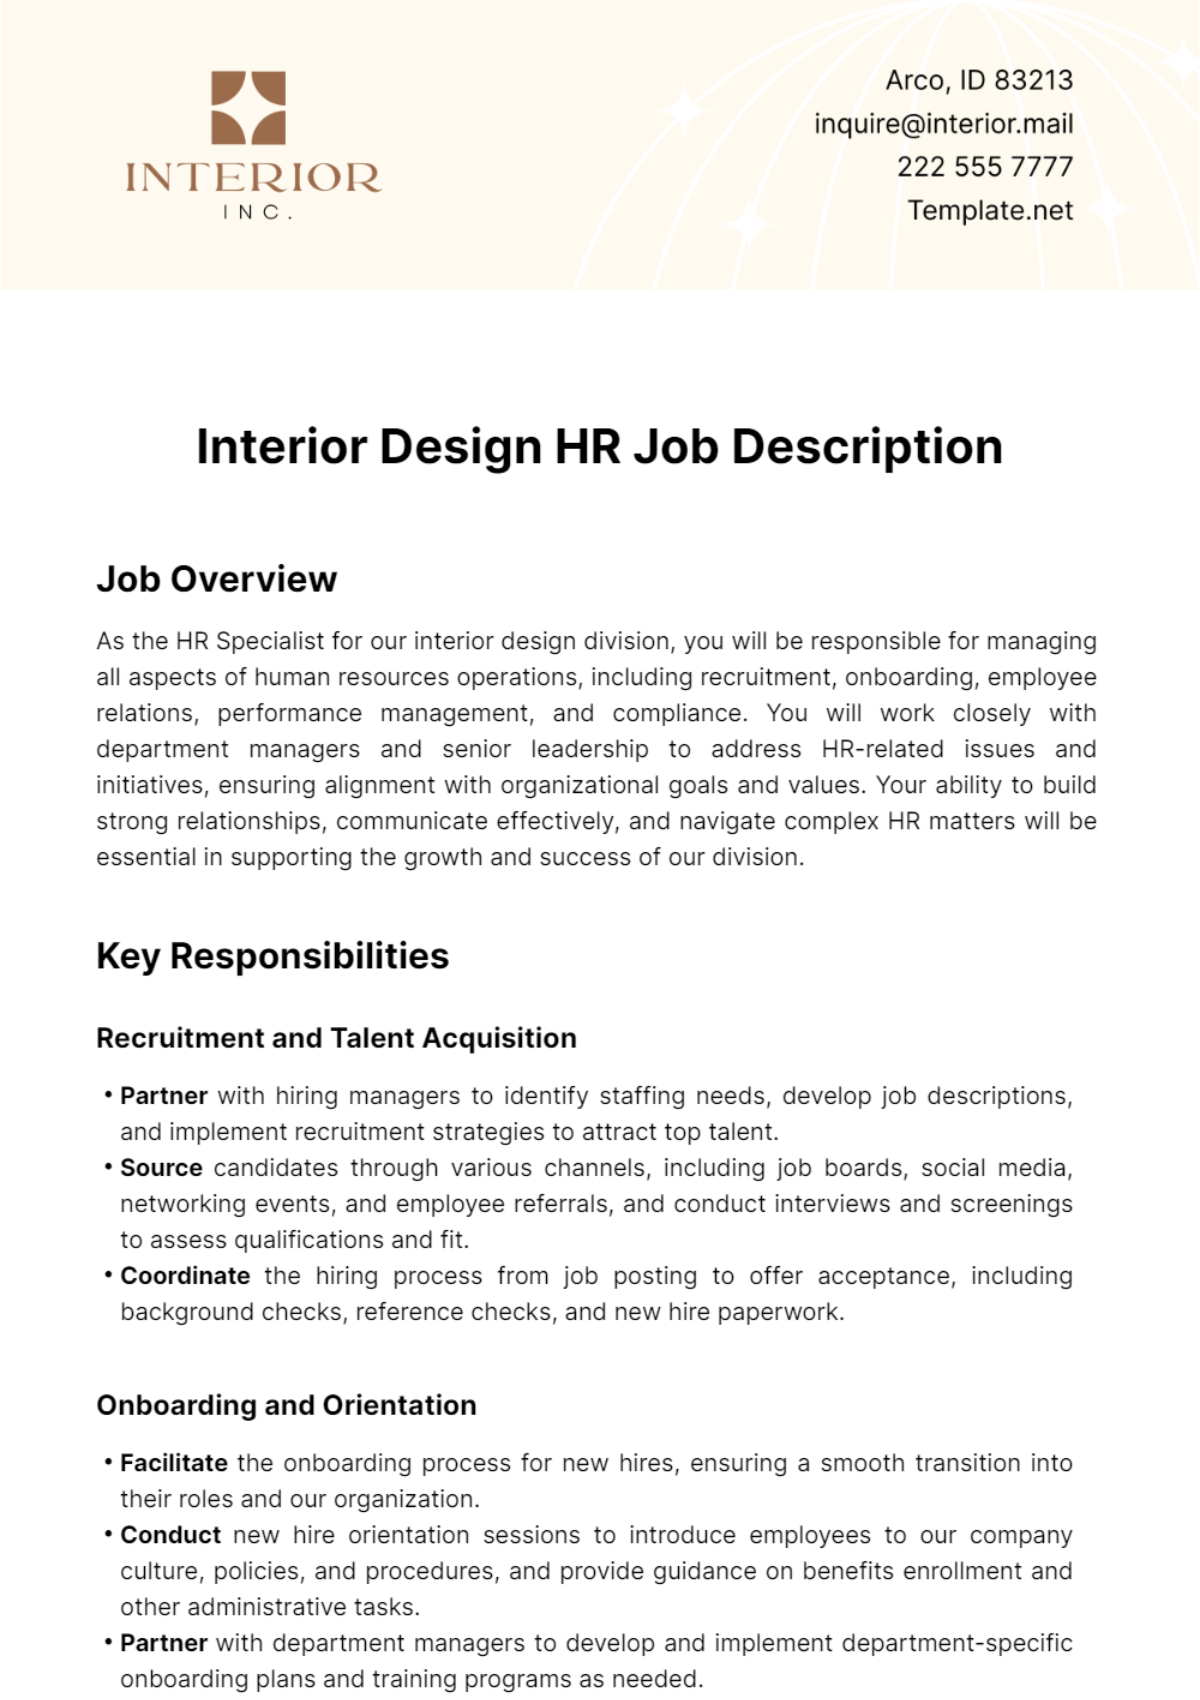 Free Interior Design HR Job Description Template